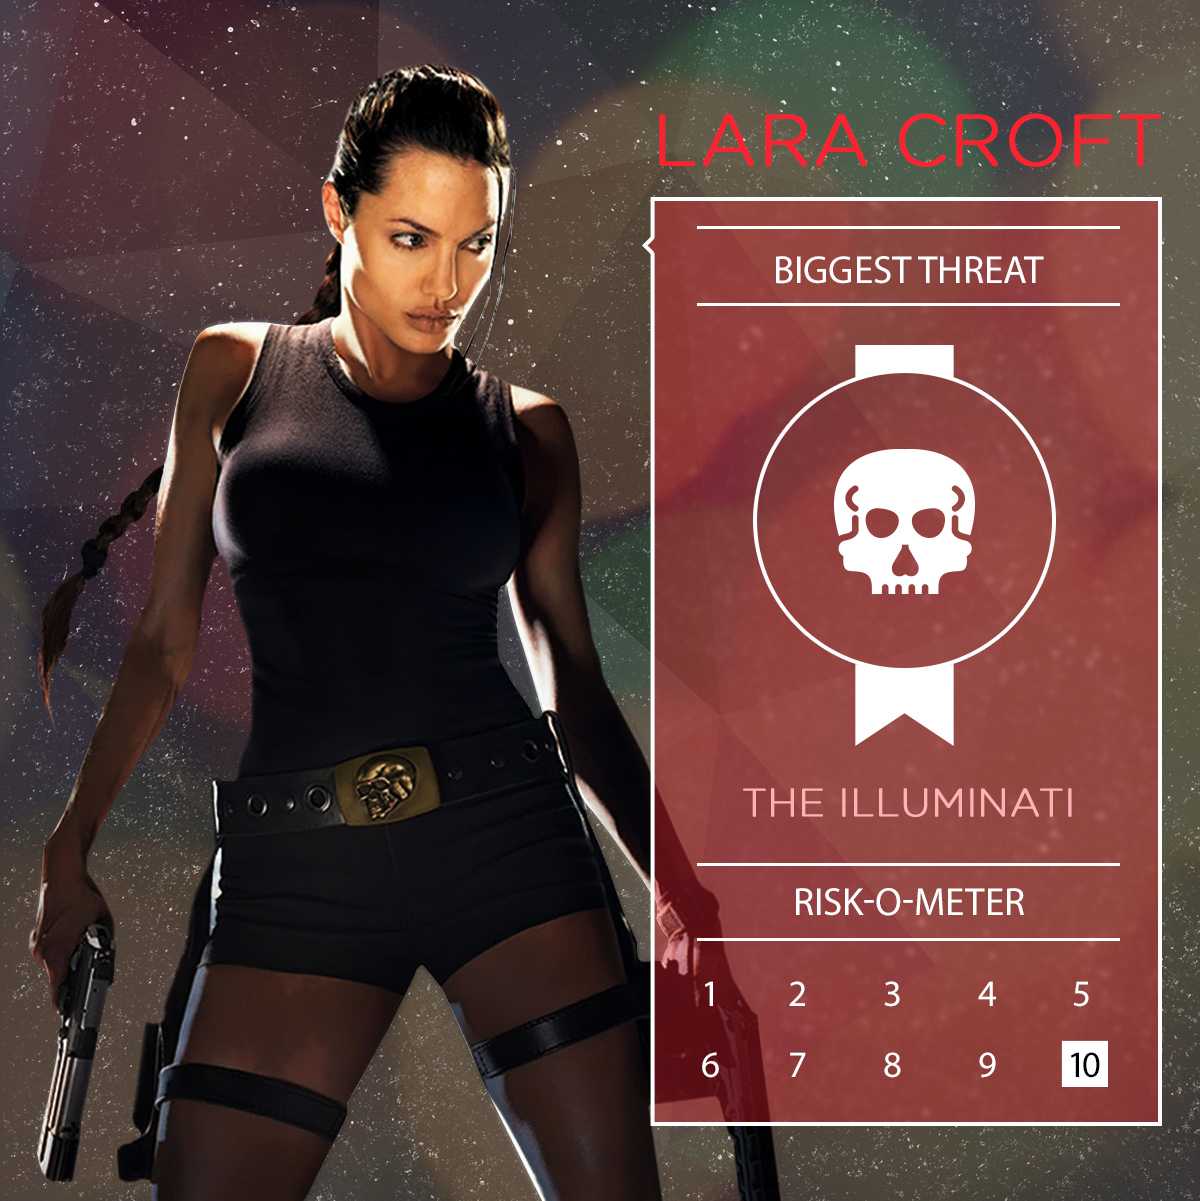 Lara Croft - Life Insurance